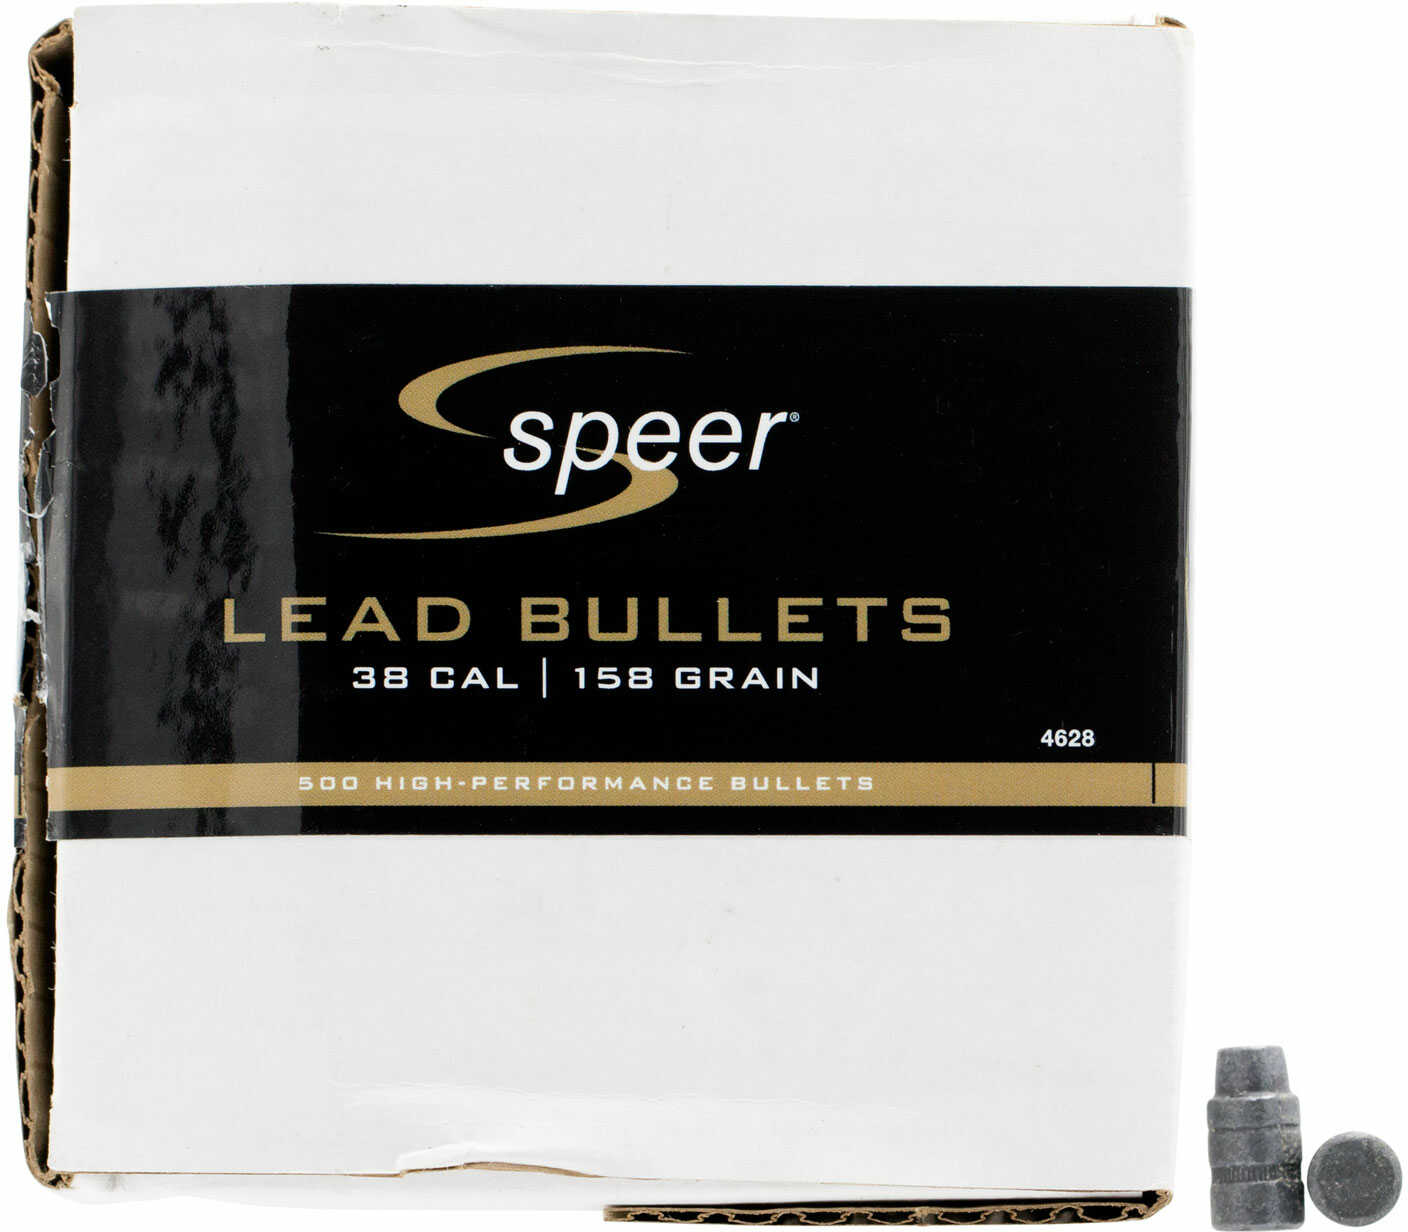 Speer 38 Caliber 158 Grain Lead Semi-Wadcutter Hollow Point 500 Bullets Per Box Md: 4628